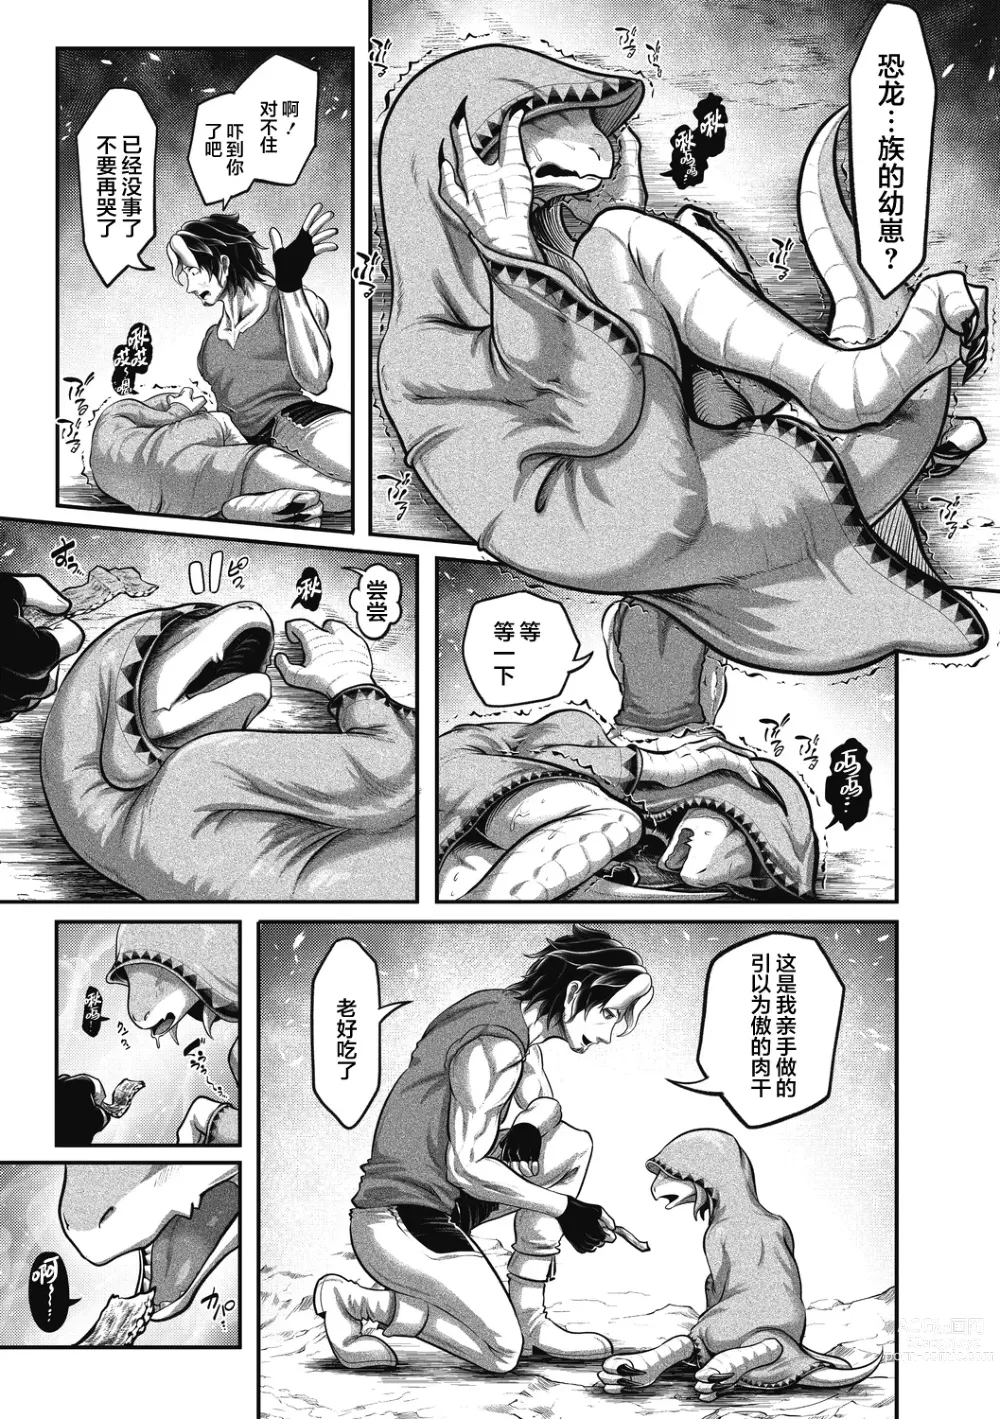 Page 4 of manga Dinosaur Journey